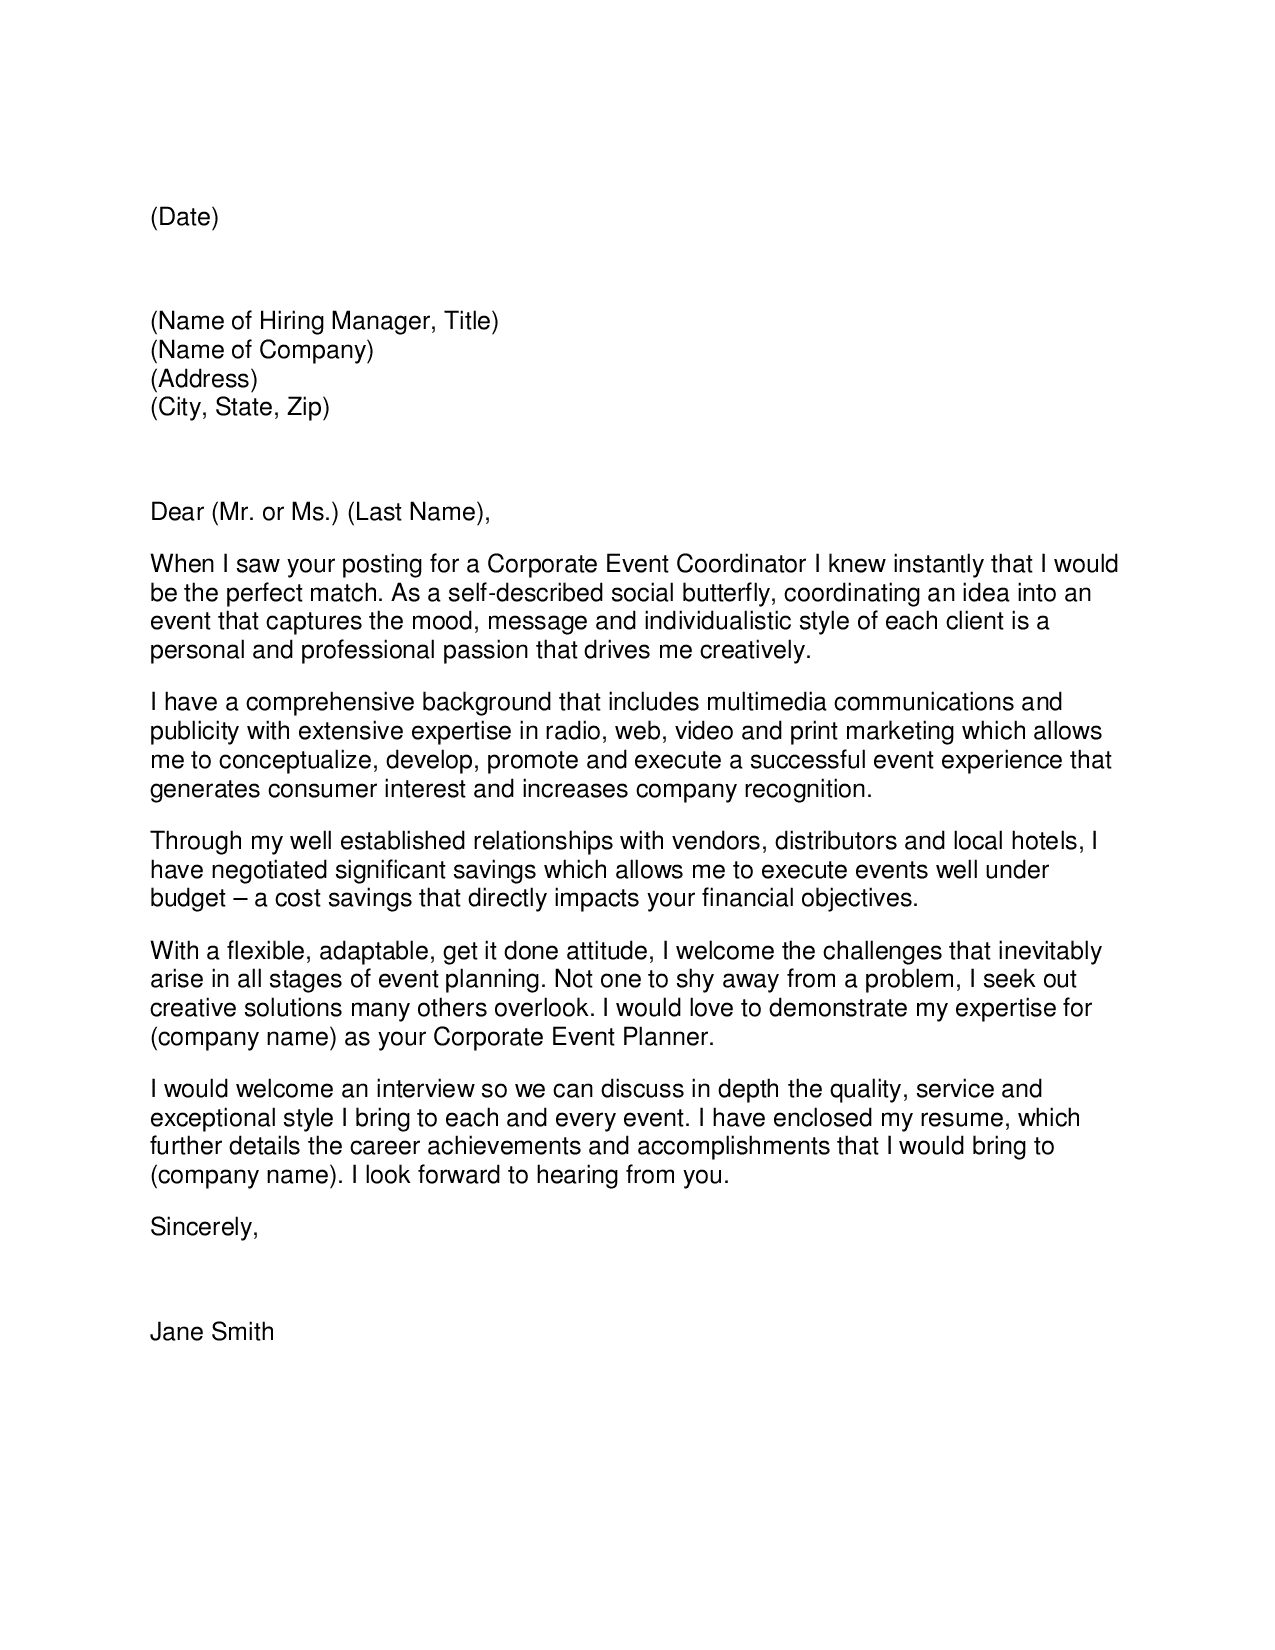 Sample Rfp Response Letter from workalpha.com